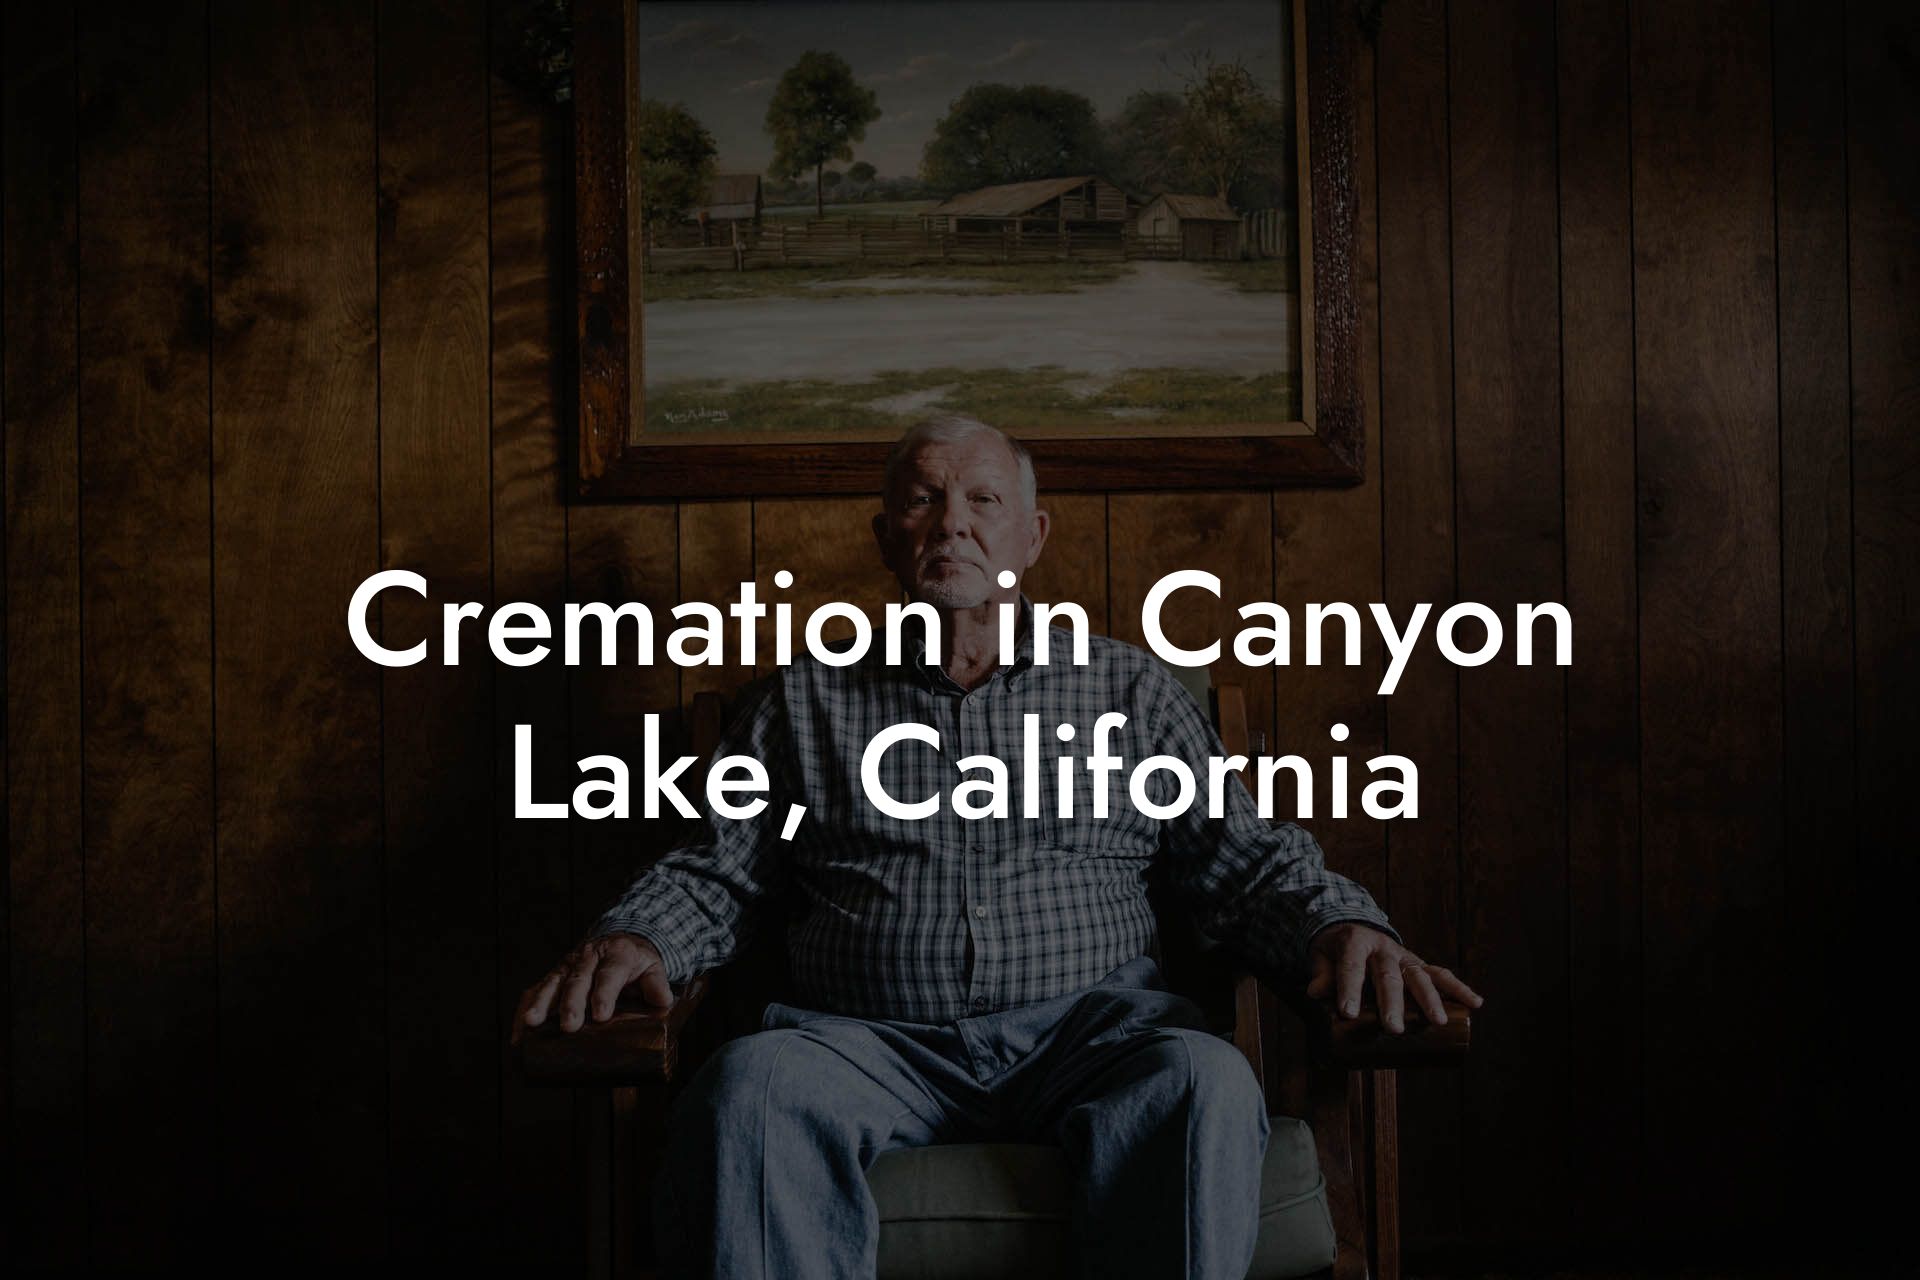 Cremation in Canyon Lake, California